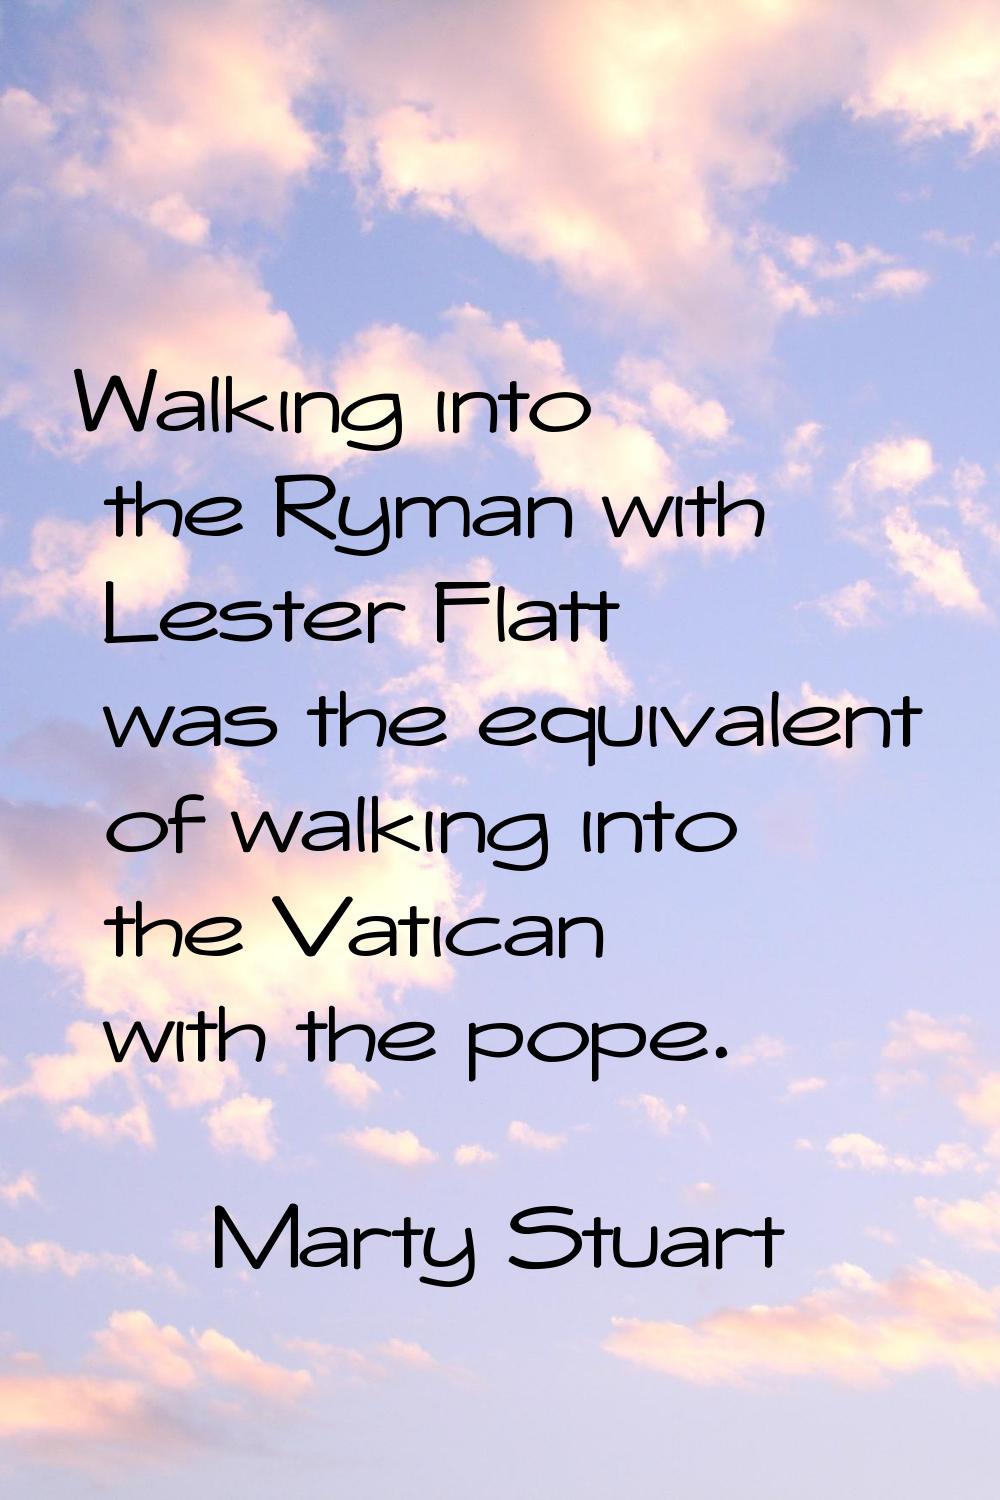 Walking into the Ryman with Lester Flatt was the equivalent of walking into the Vatican with the po